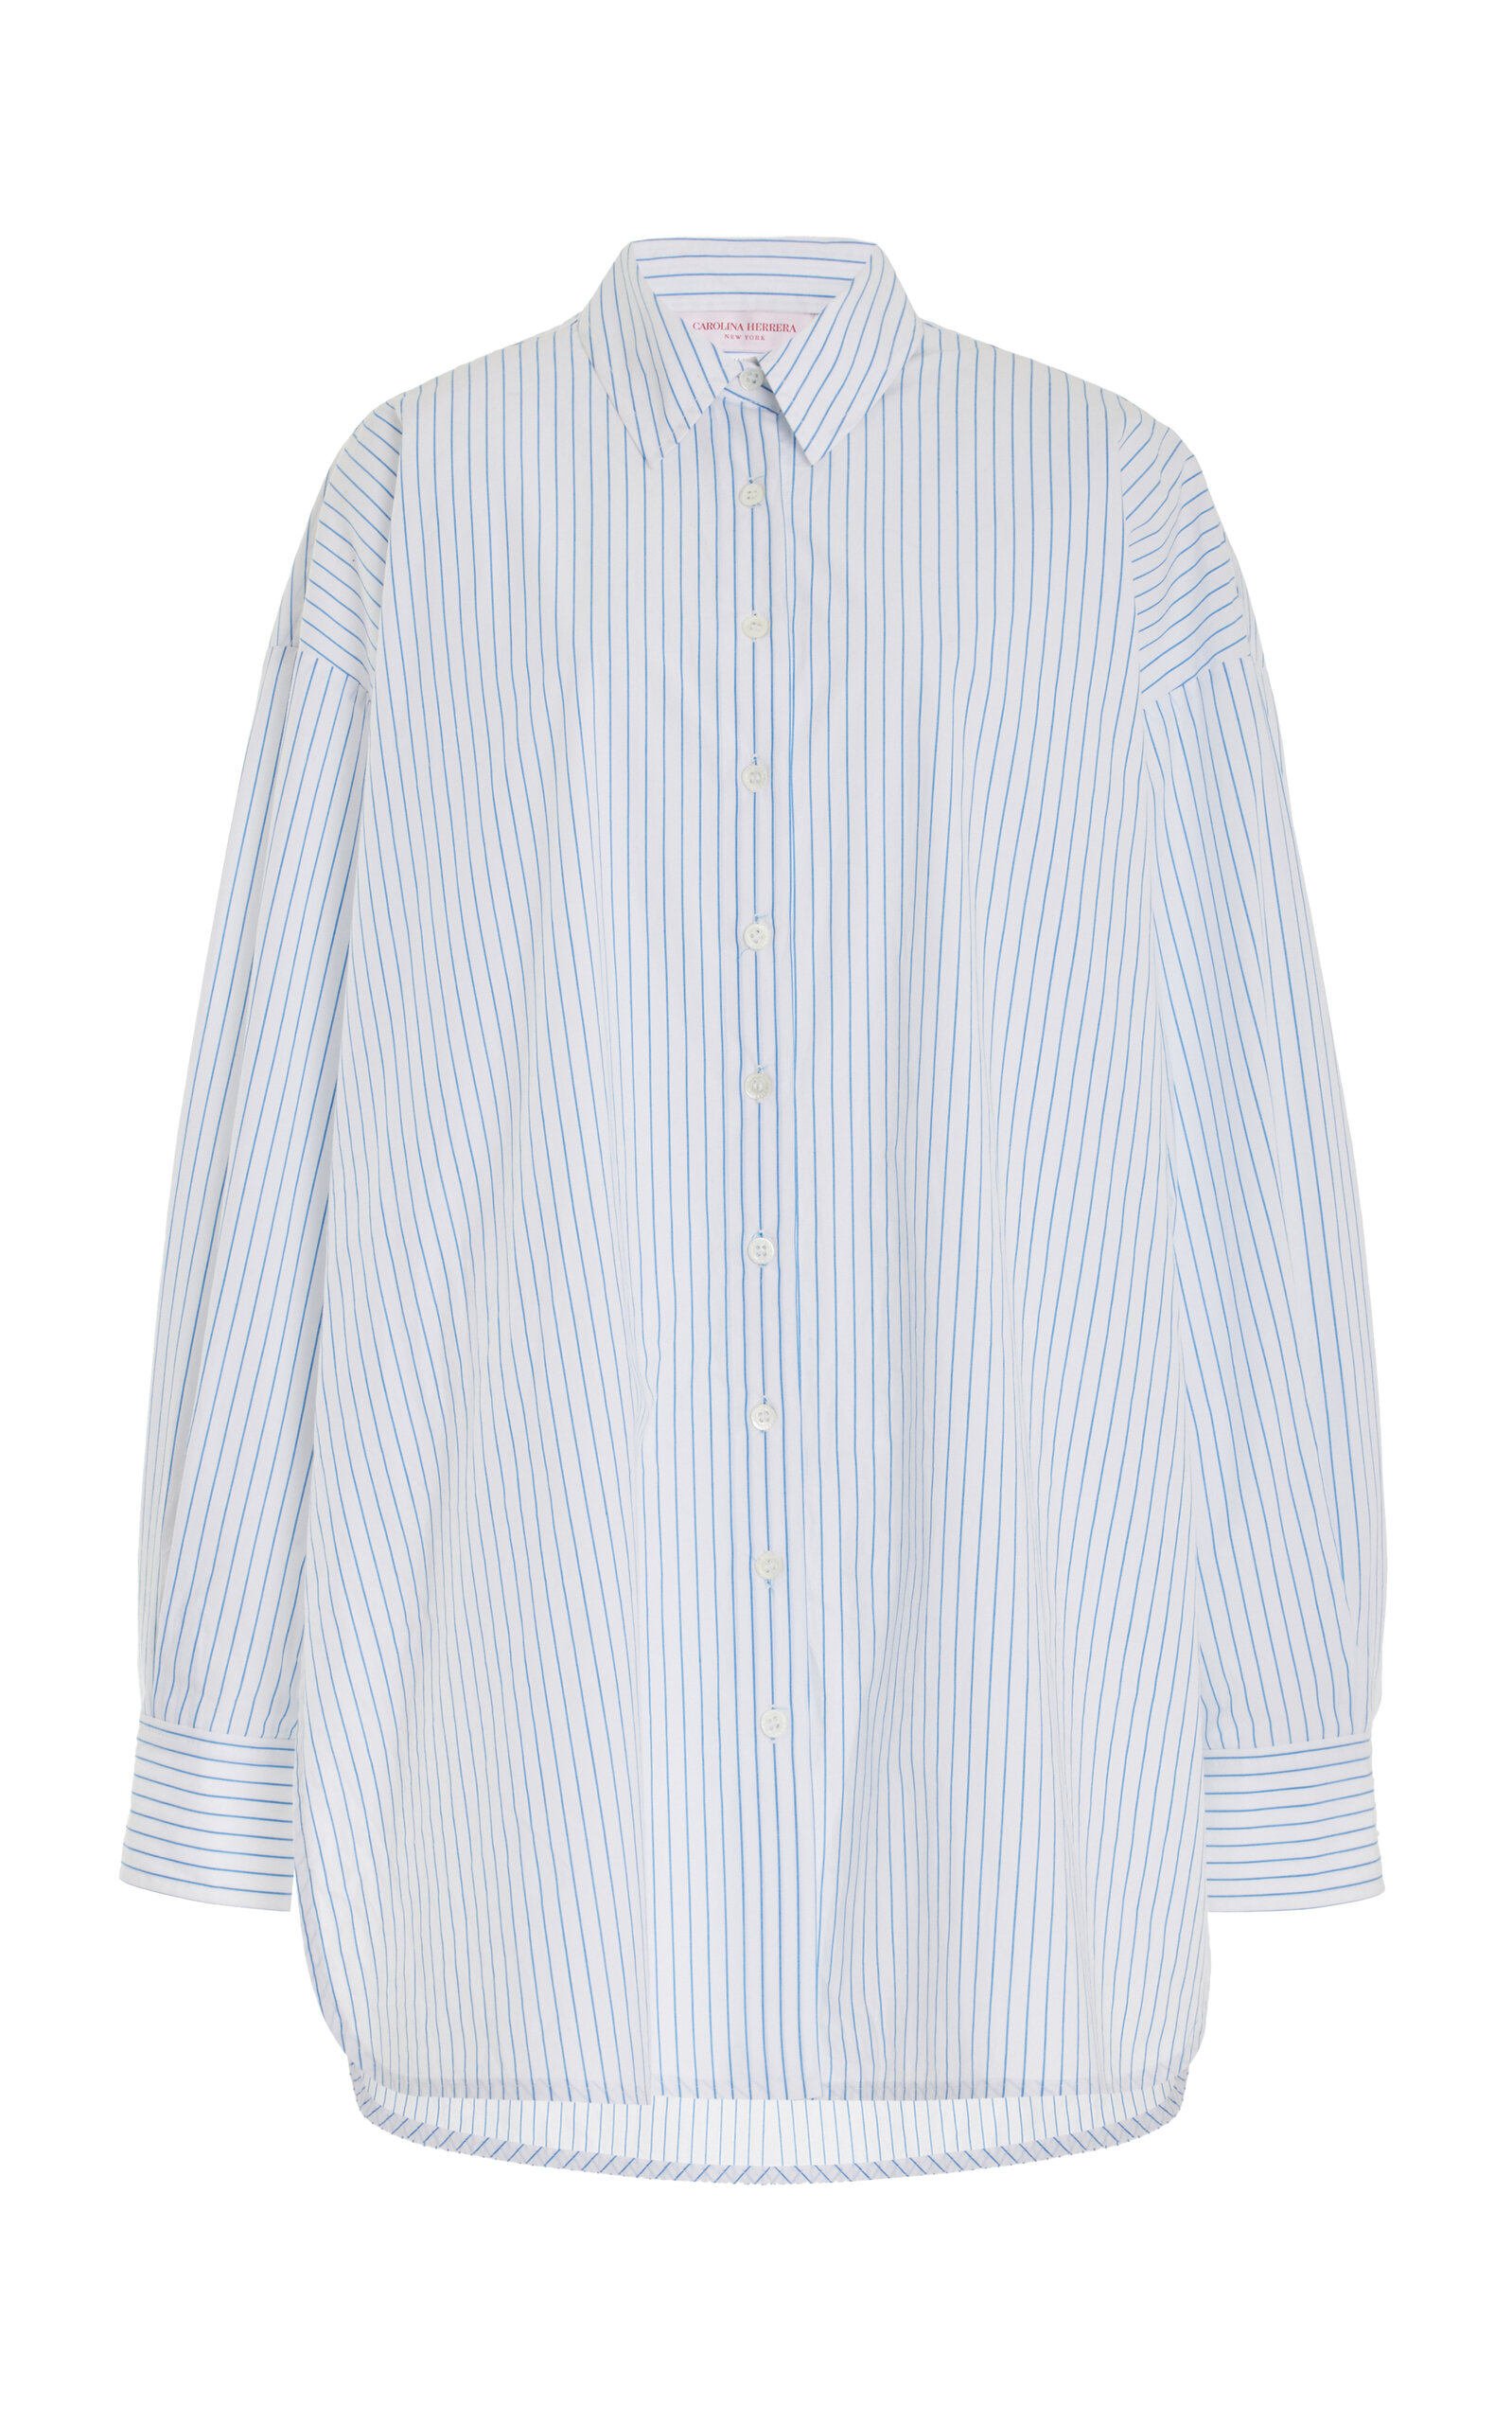 Carolina Herrera - Striped Cotton Shirt - White - US 12 - Moda Operandi